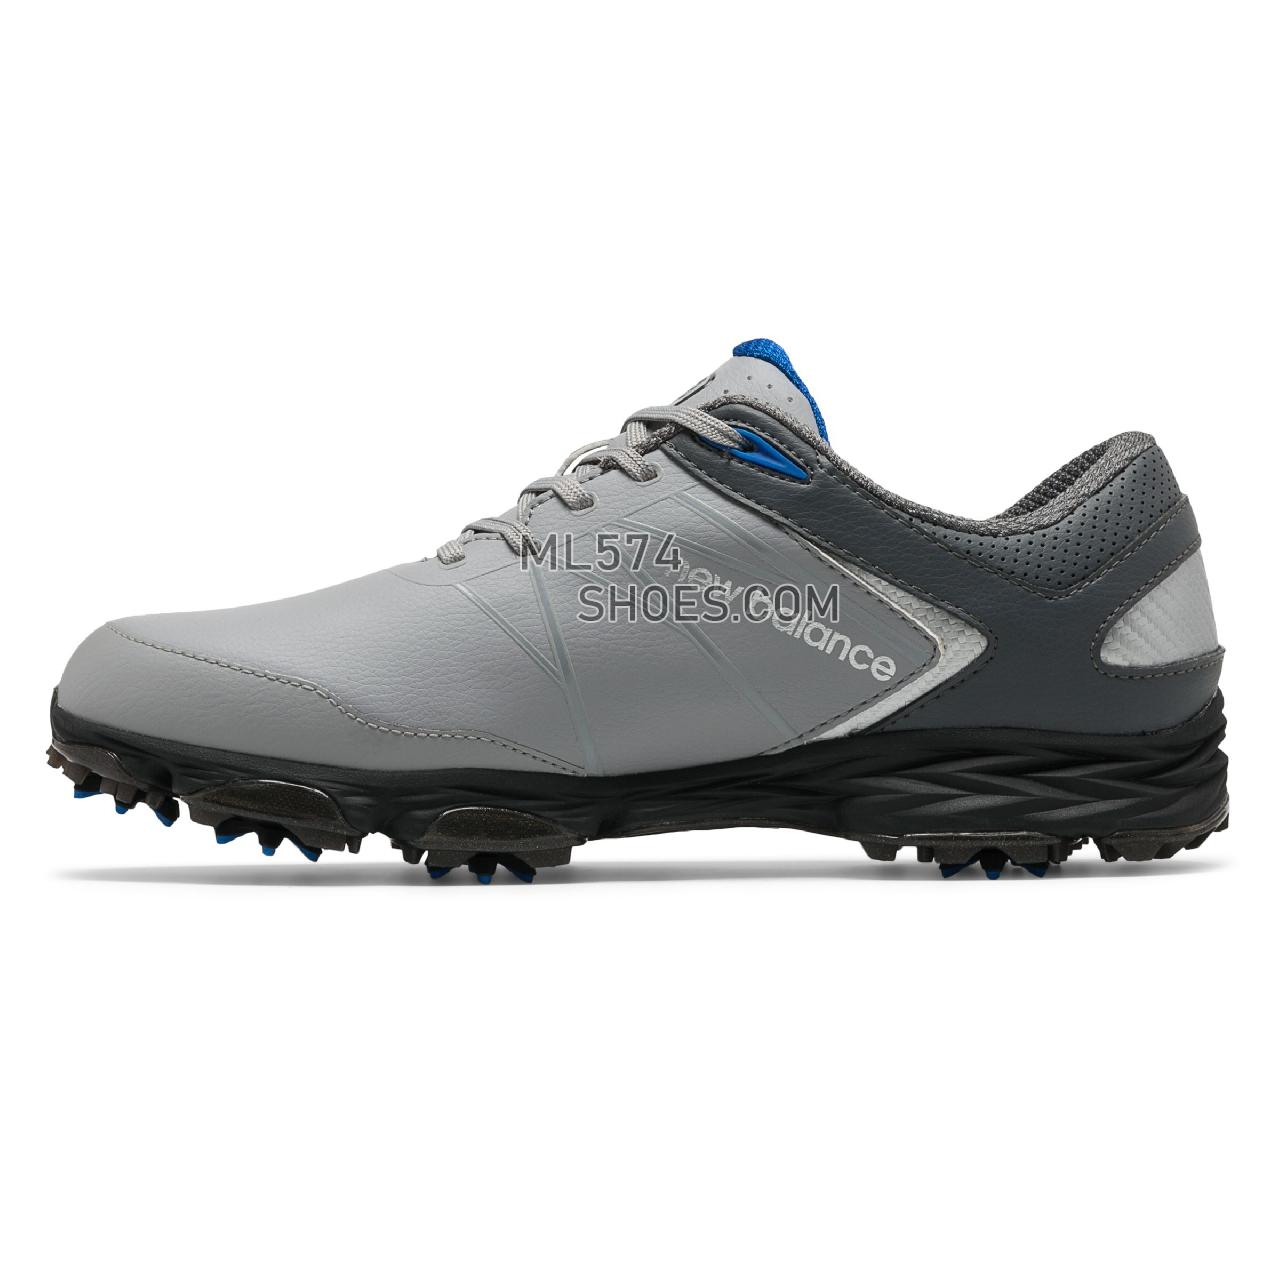 New Balance Striker - Men's Golf - Grey with Blue - NBG2005GB